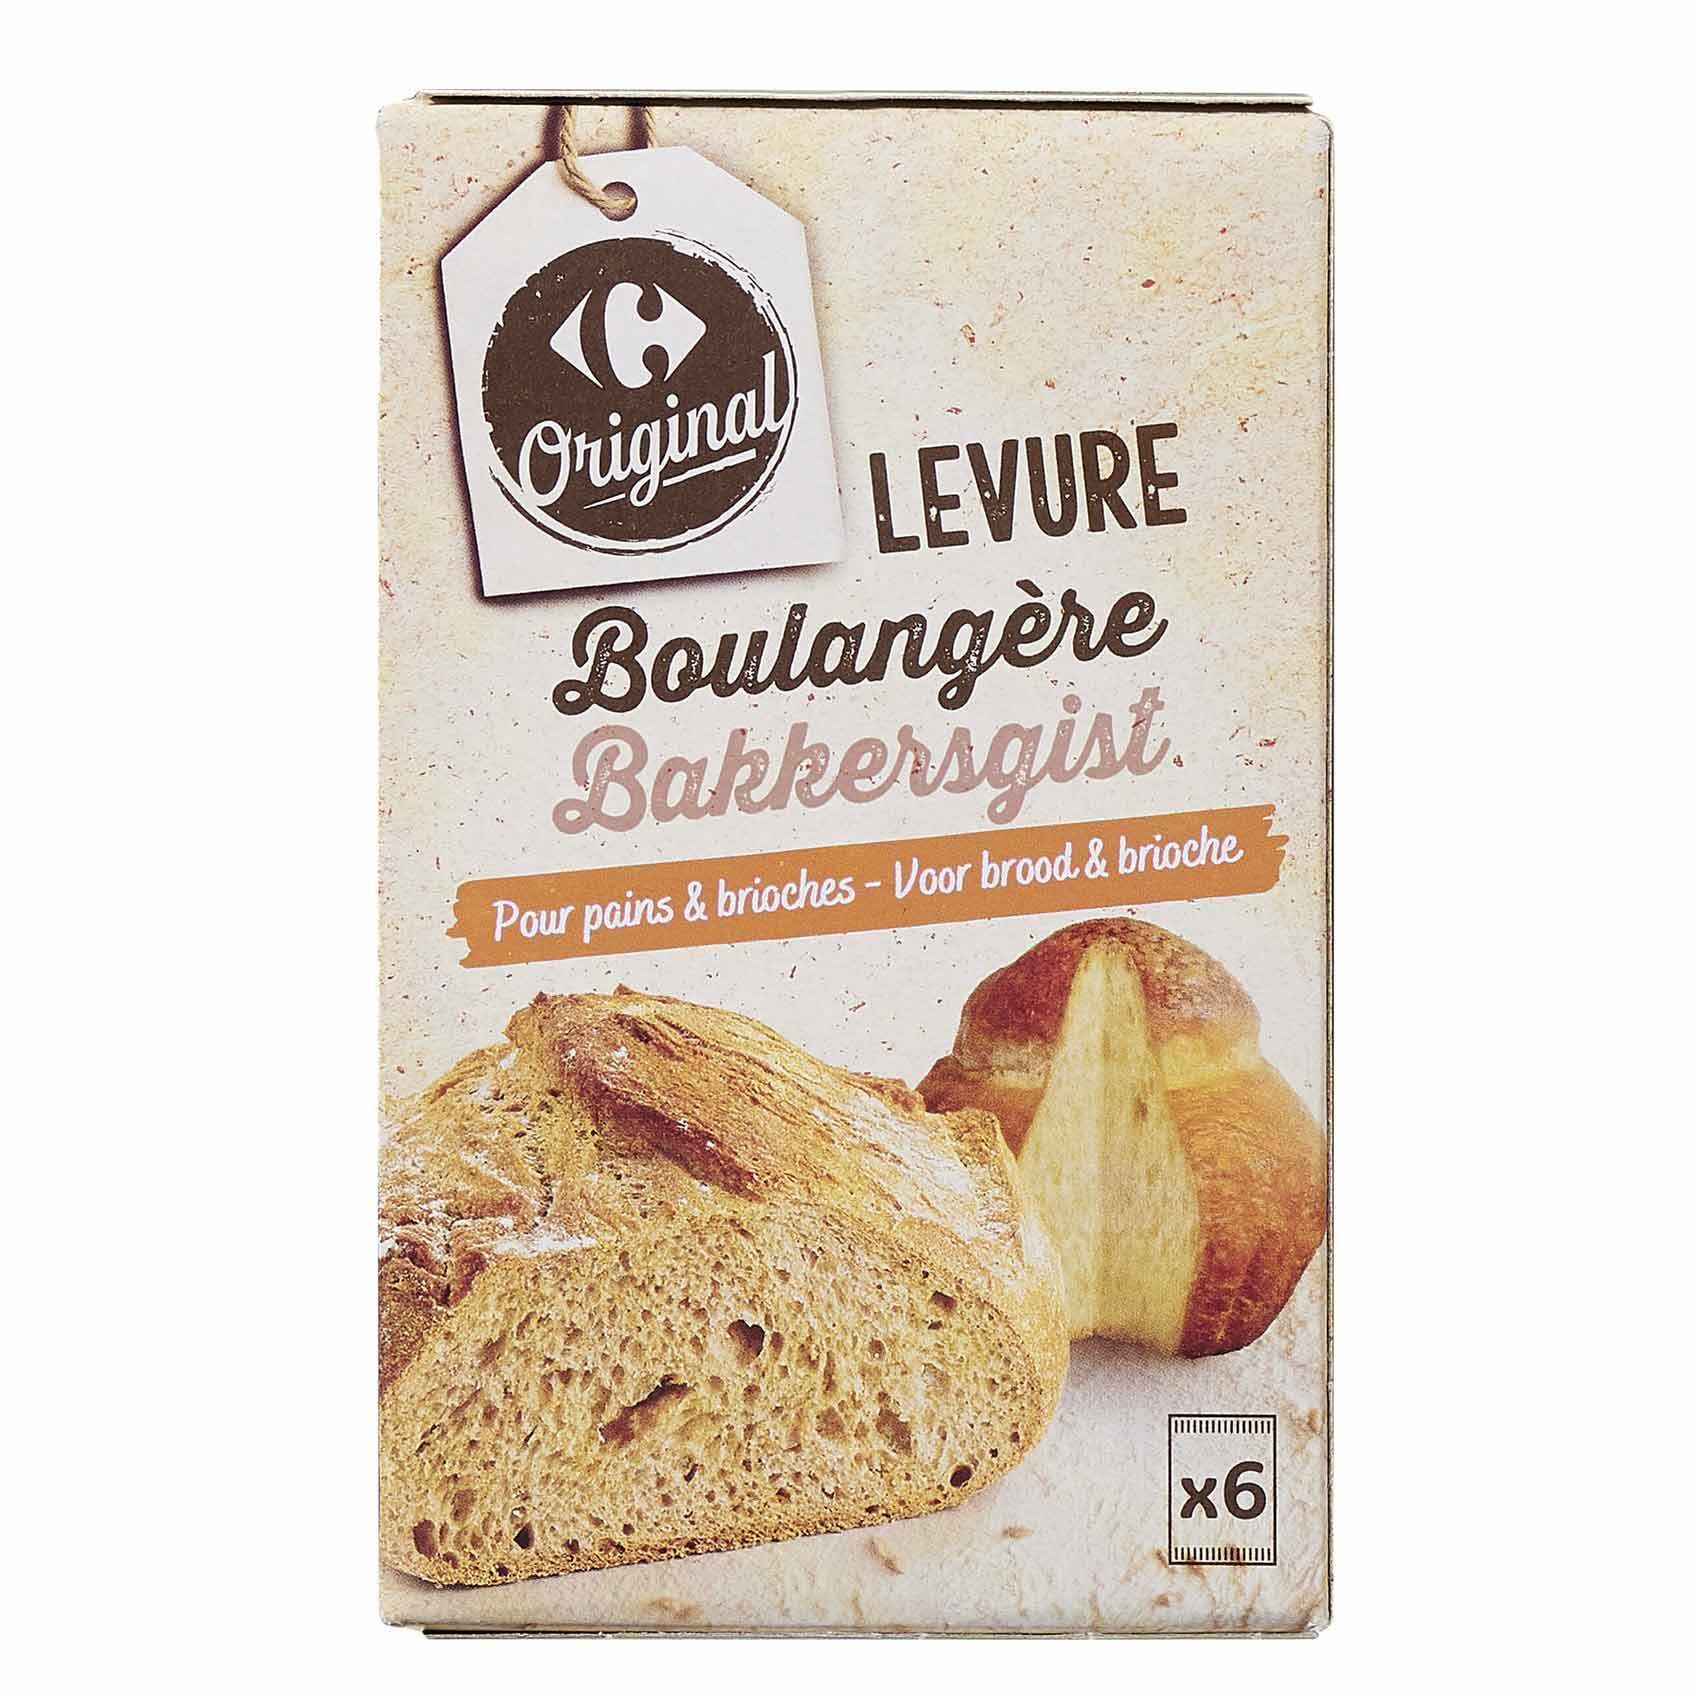 Francine Levure Boulangere - Instan dry yeast